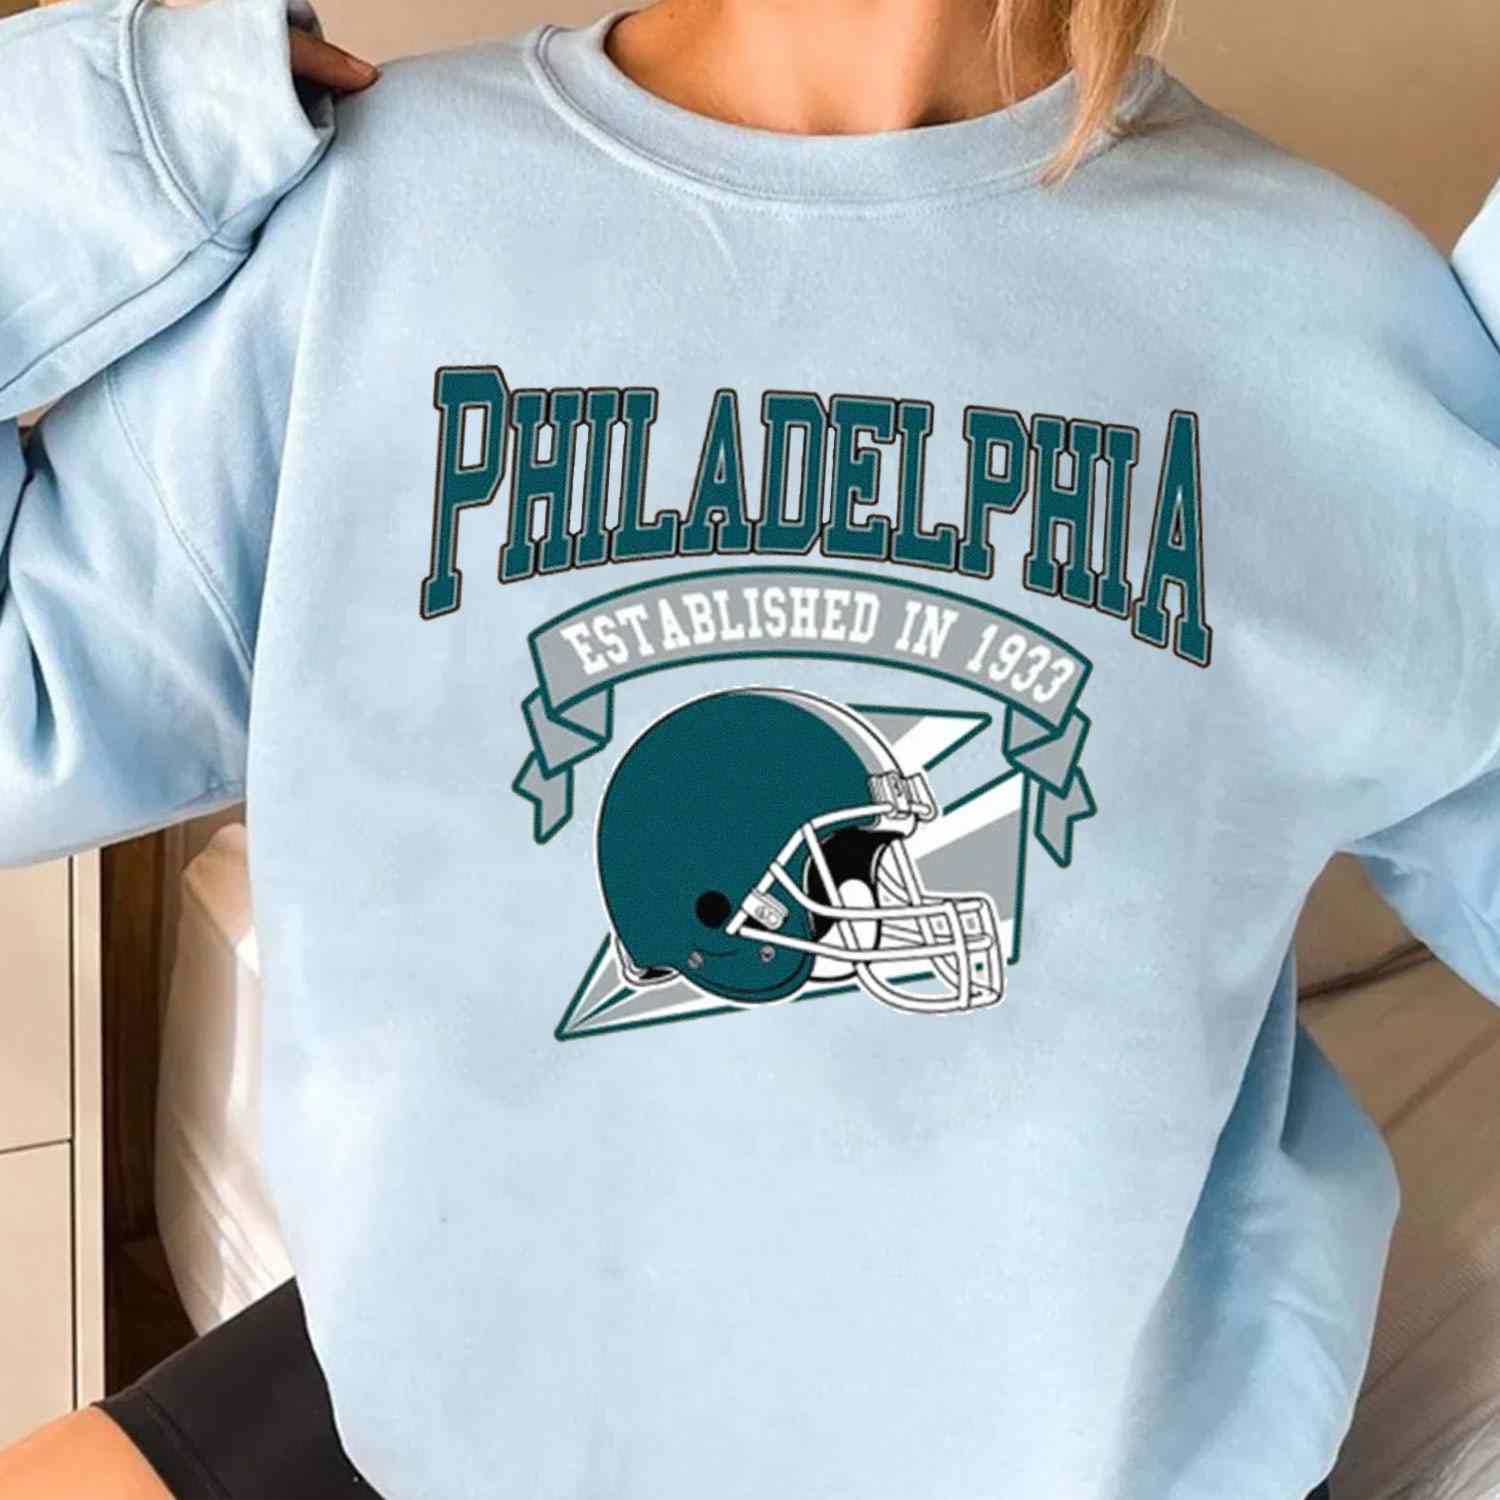 Vintage Football Team Philadelphia Eagles Established In 1933 T-Shirt